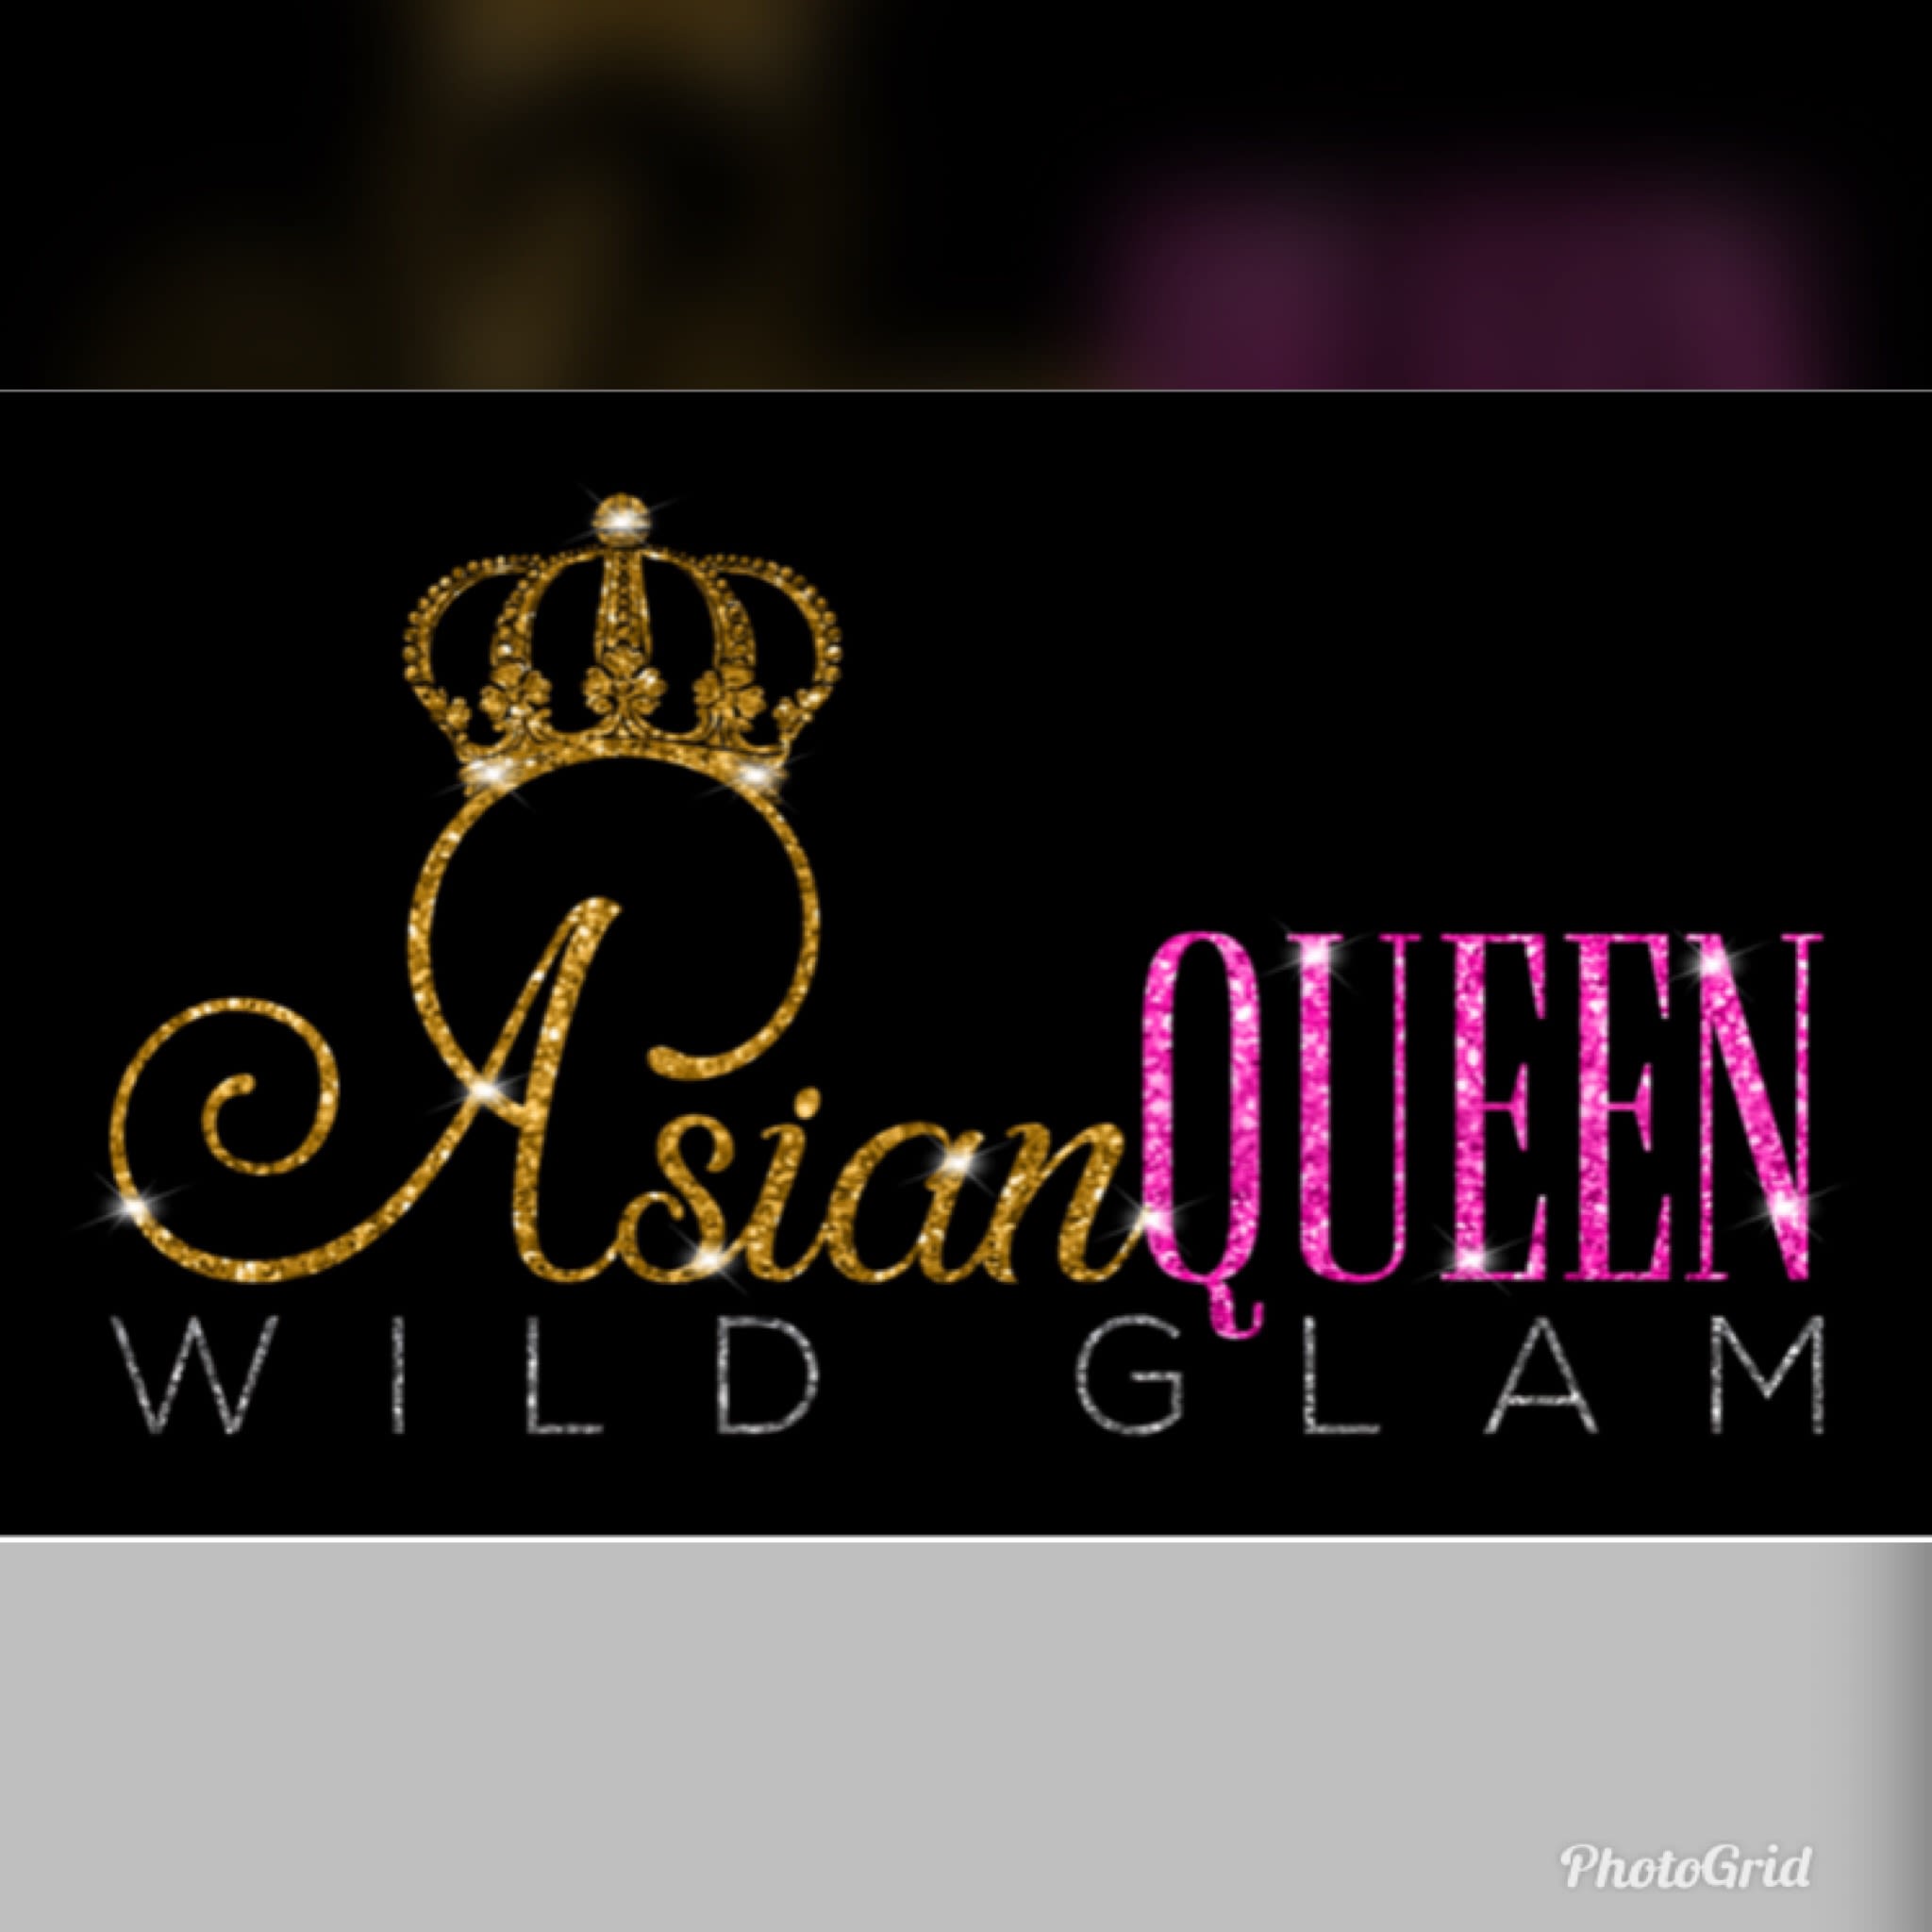 Asian Queen Wild Glam